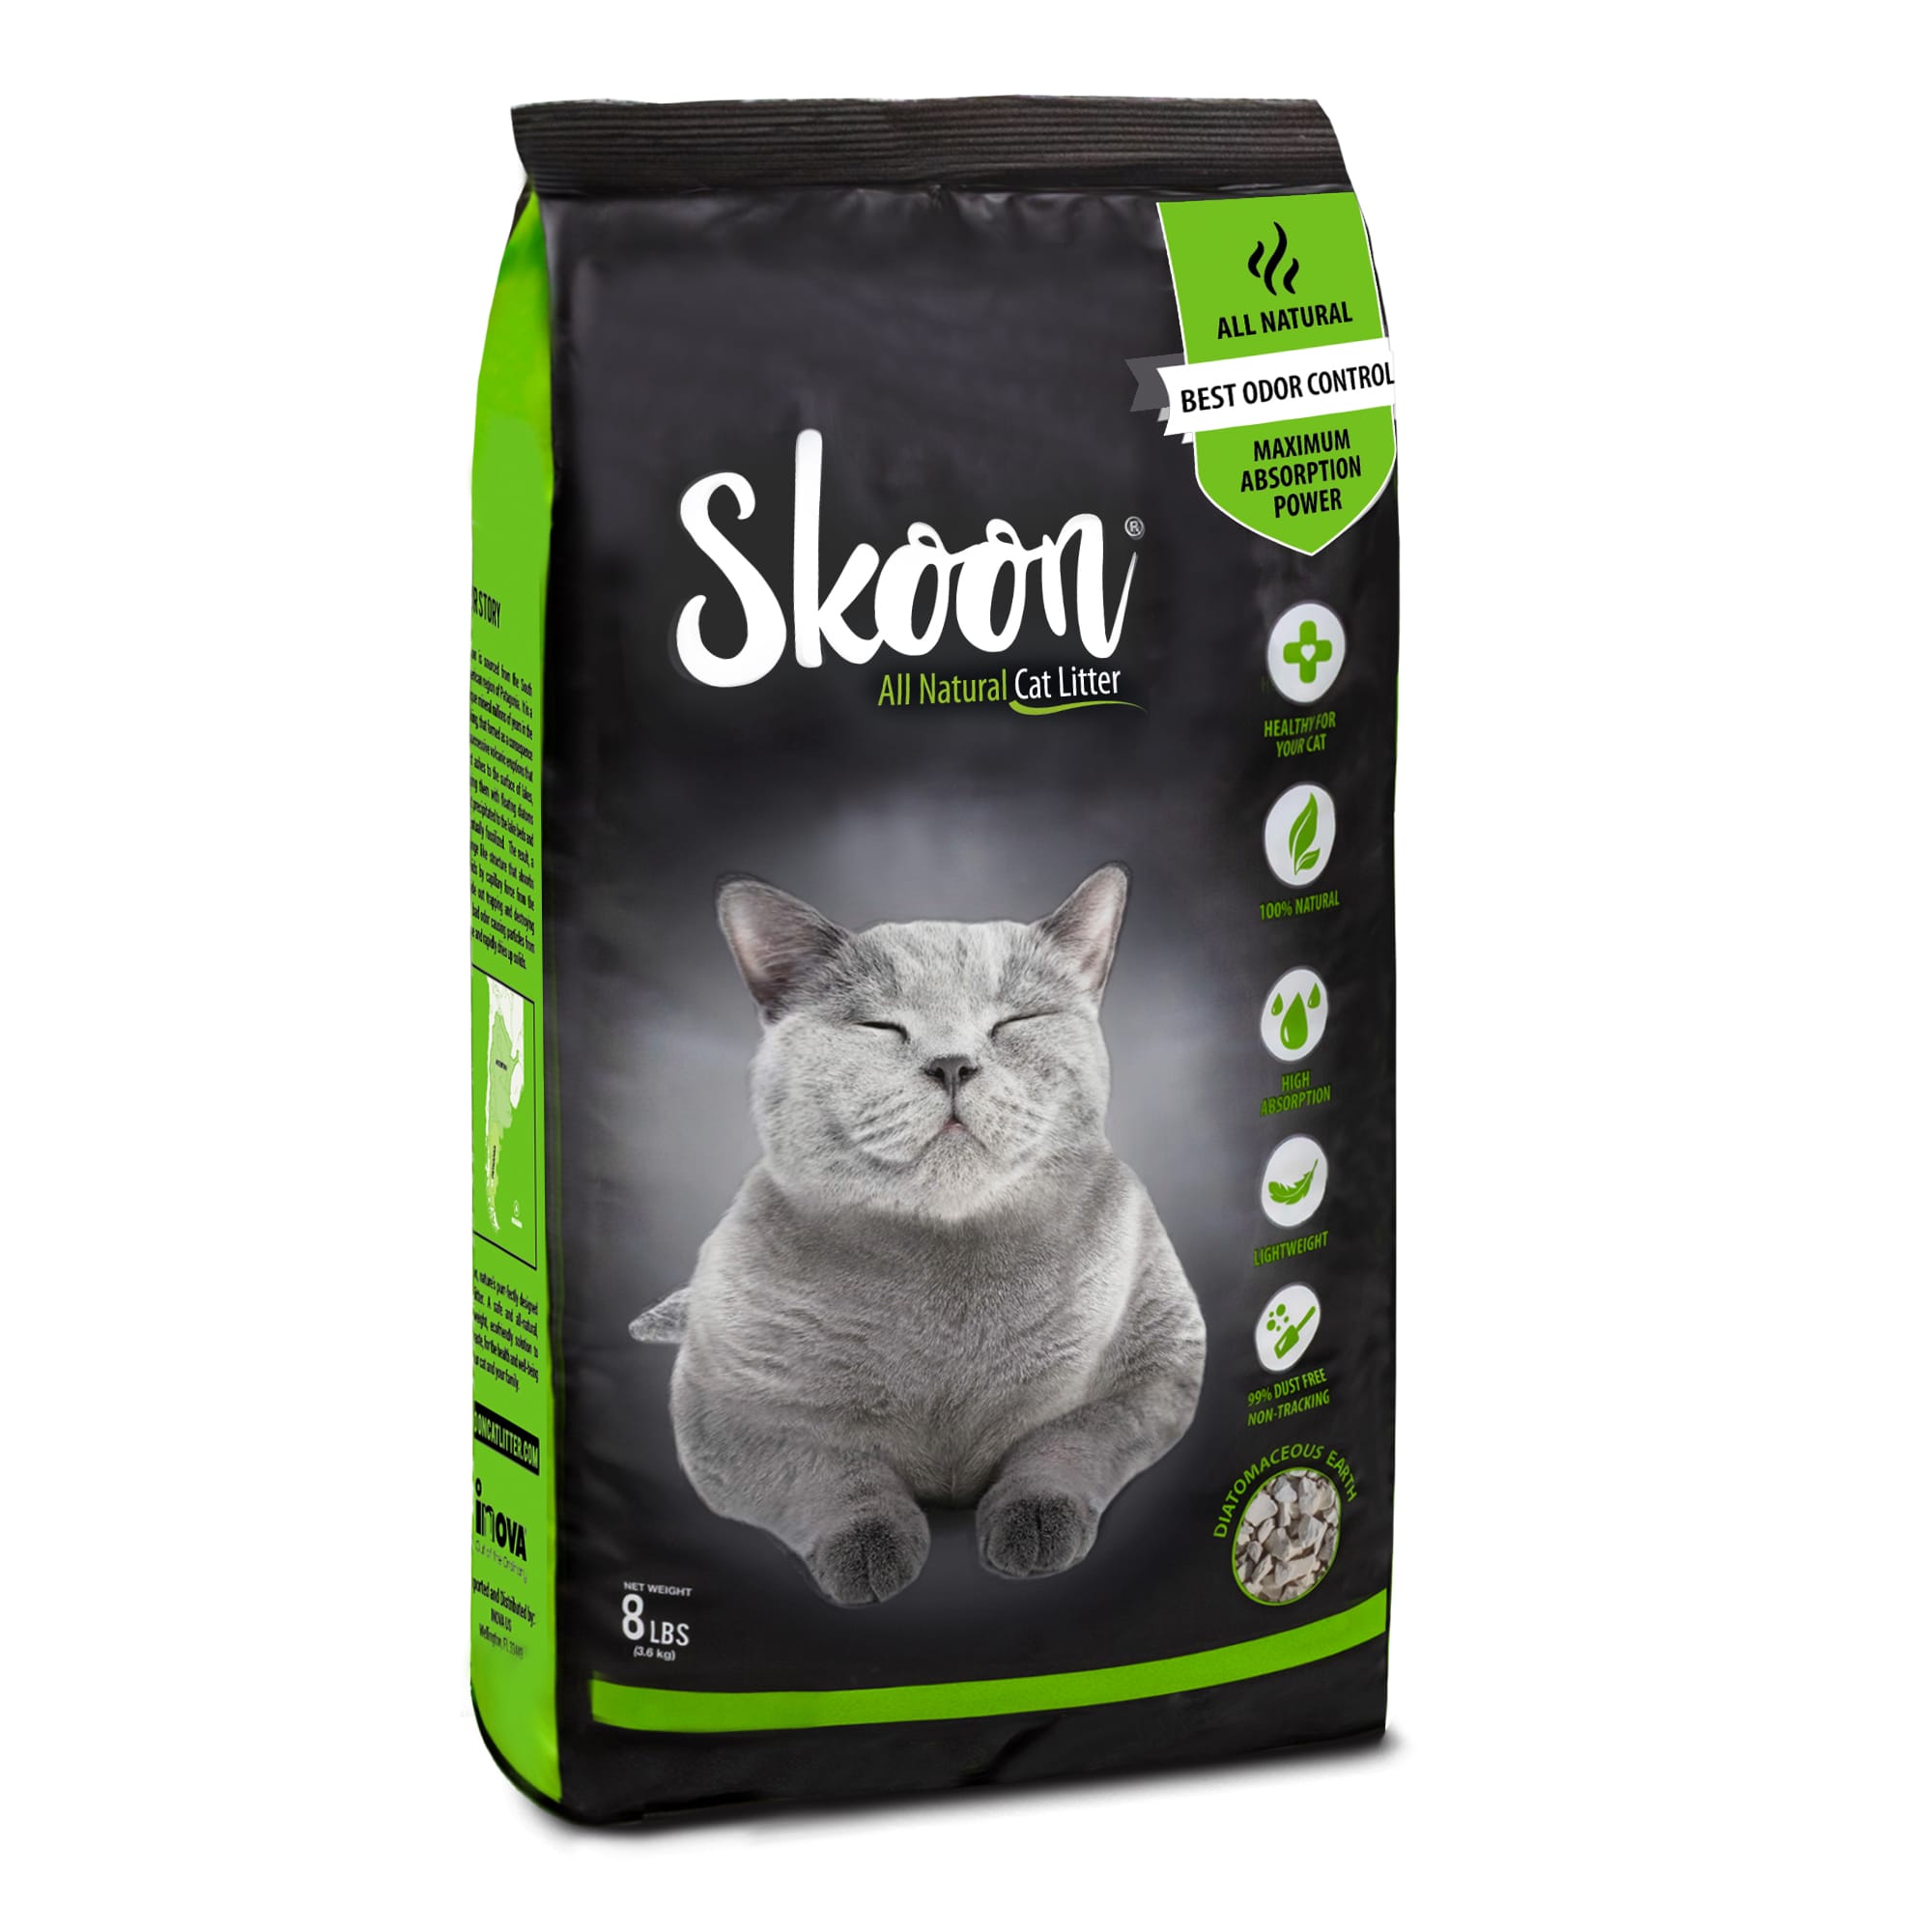 Skoon All-Natural Cat Litter